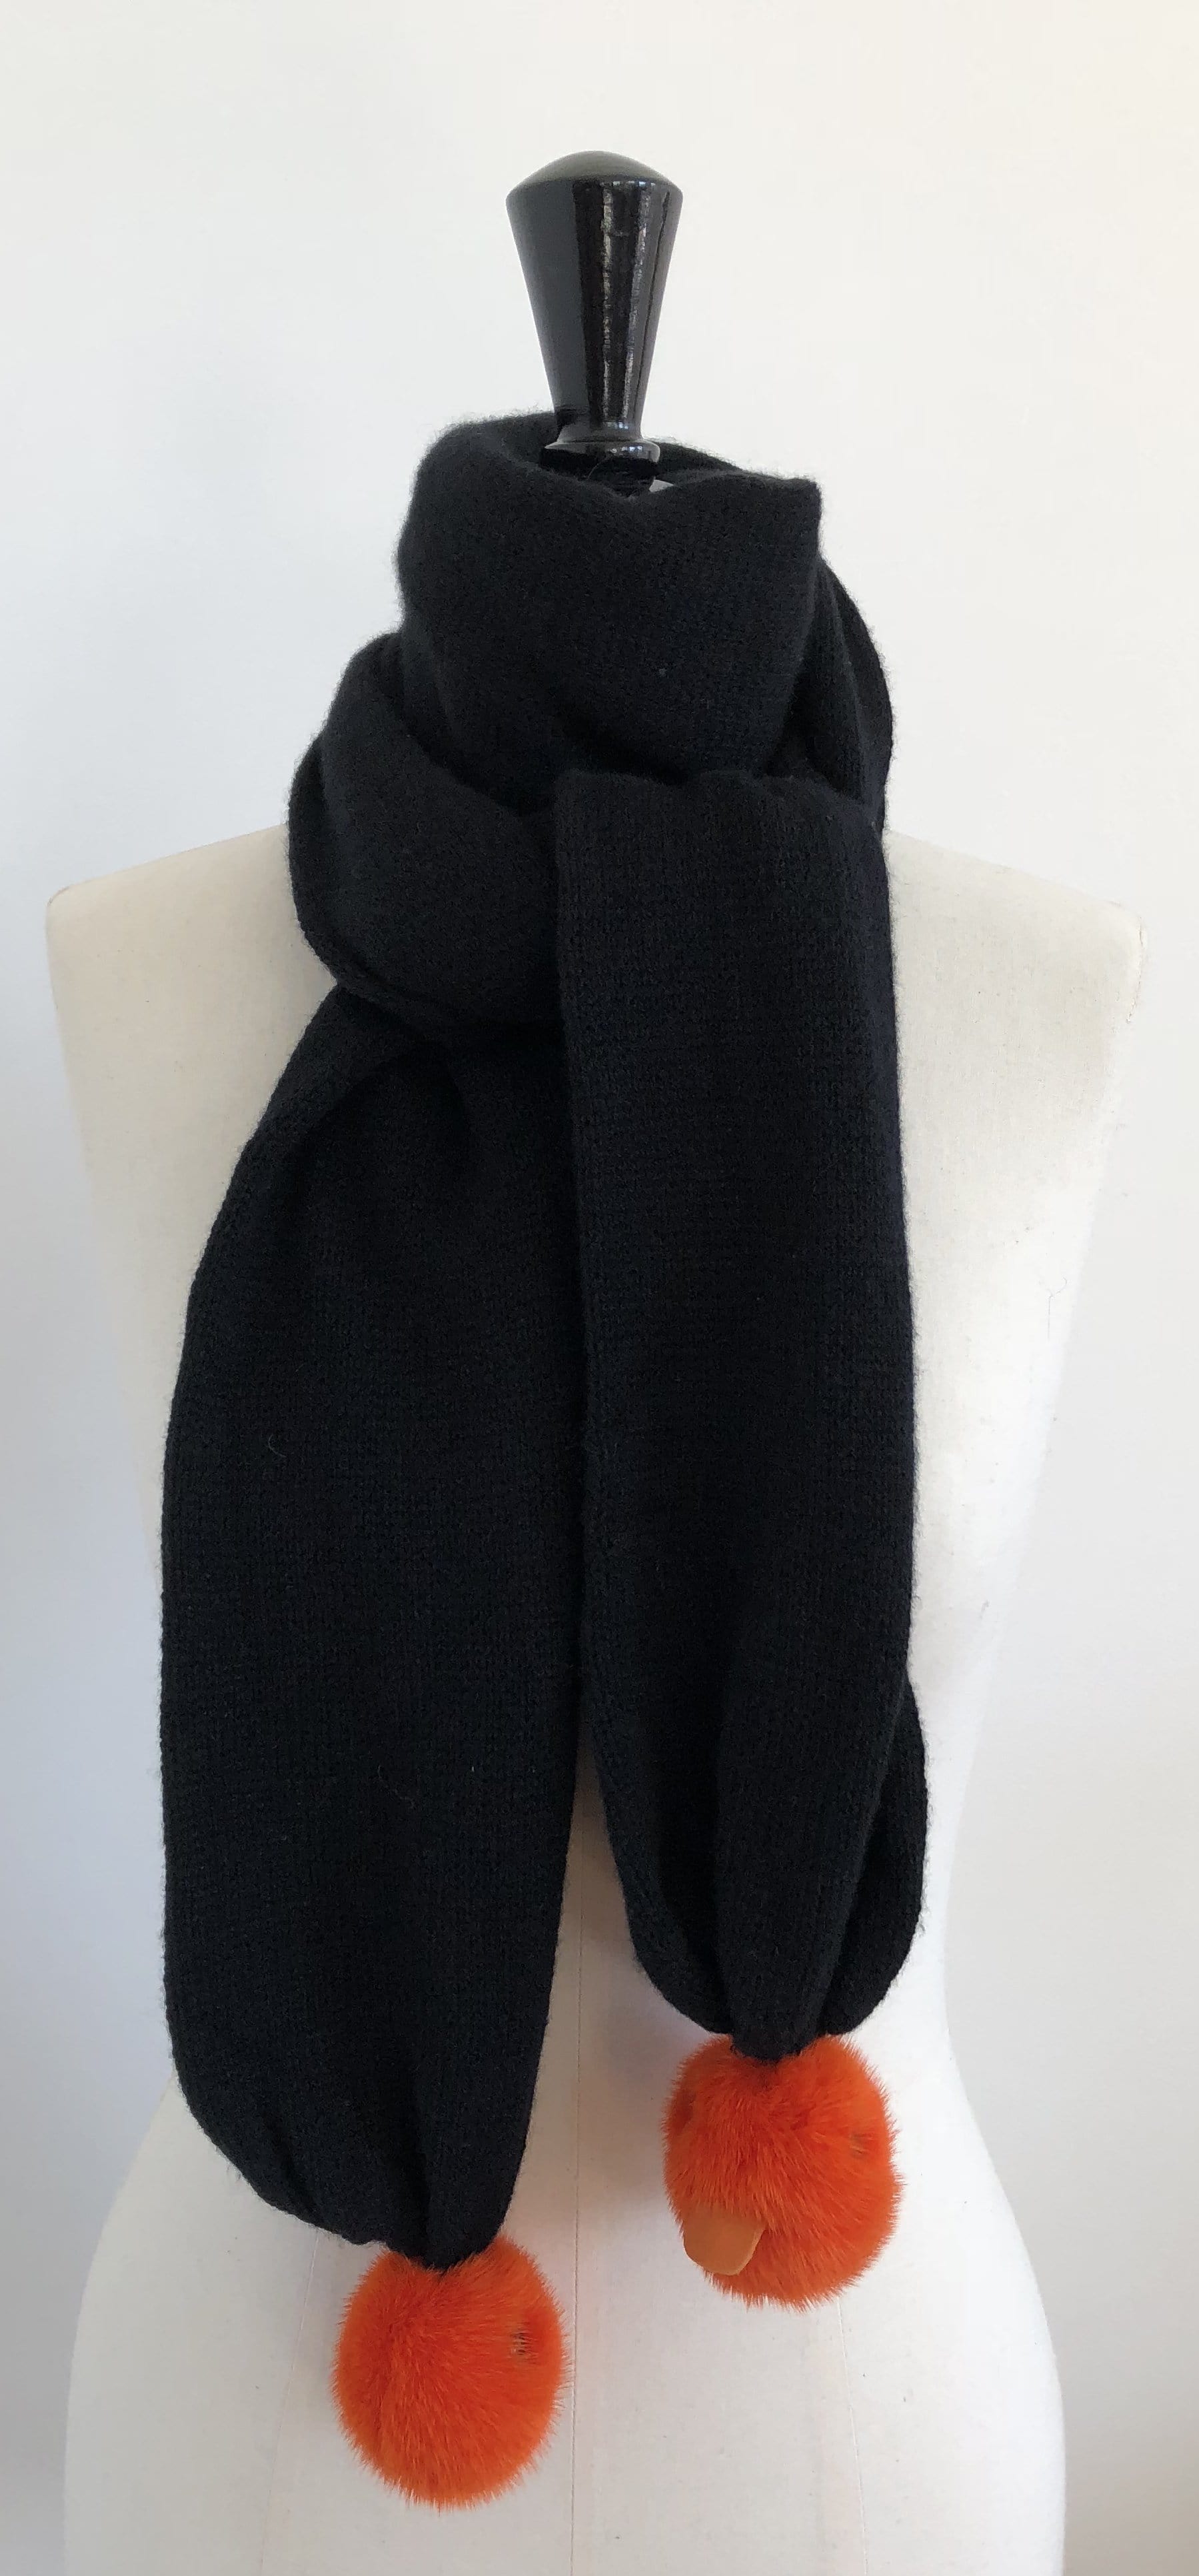 Echarpe Evesome à pompons canaris en fourrure en maille 100% cachemire -  Evesome scarf with 100% cashmere knit fur pompoms